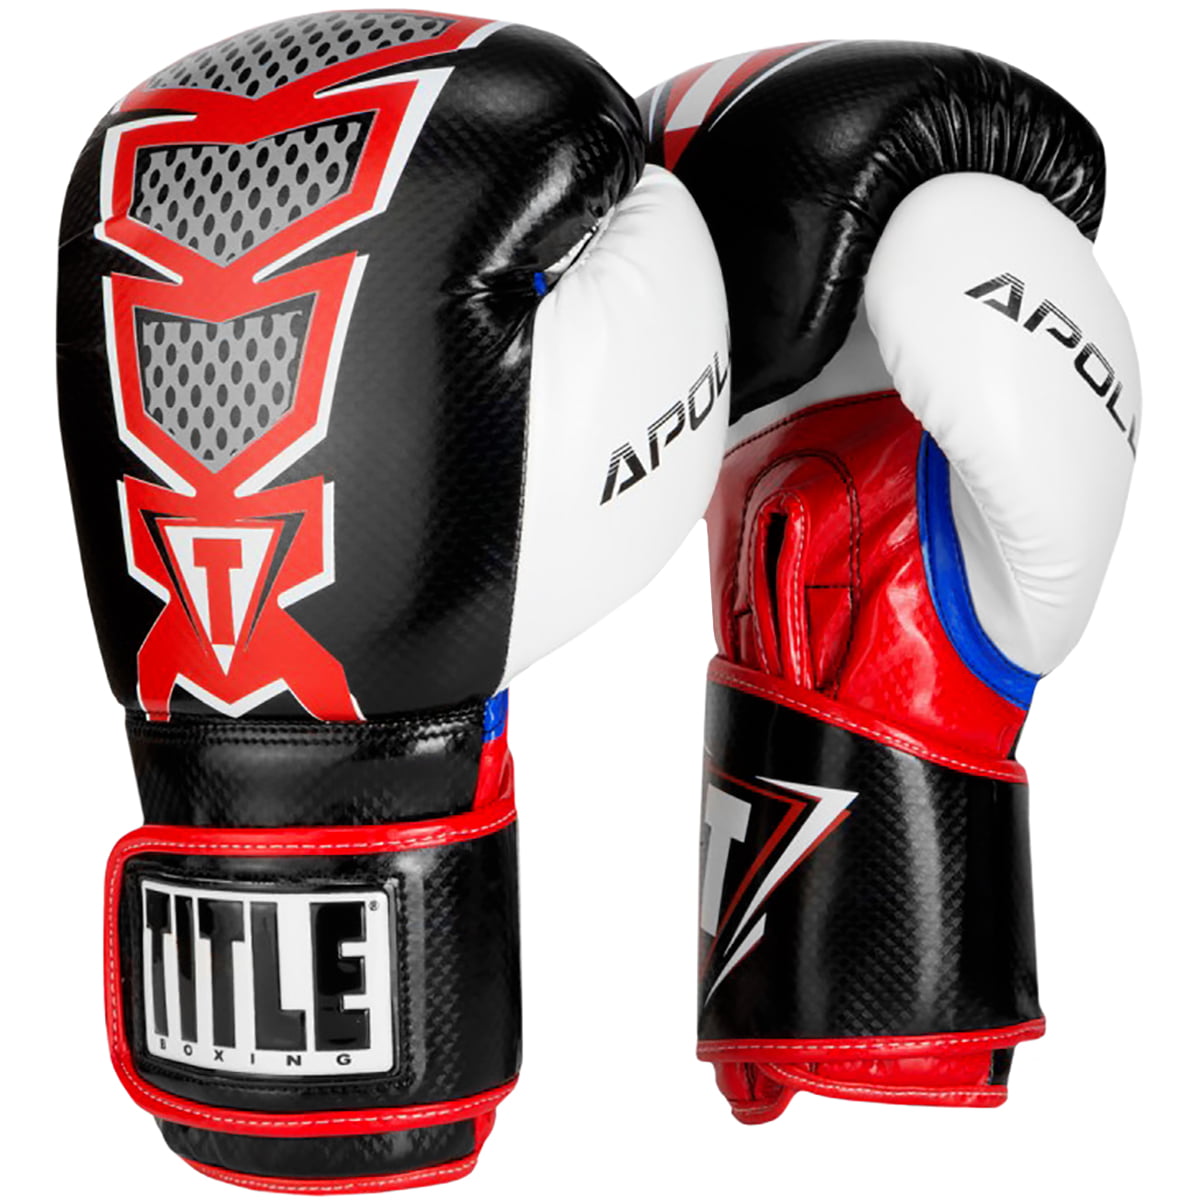 New in Bag Black Title Boxing HIT IT HARD Training Gloves REG 